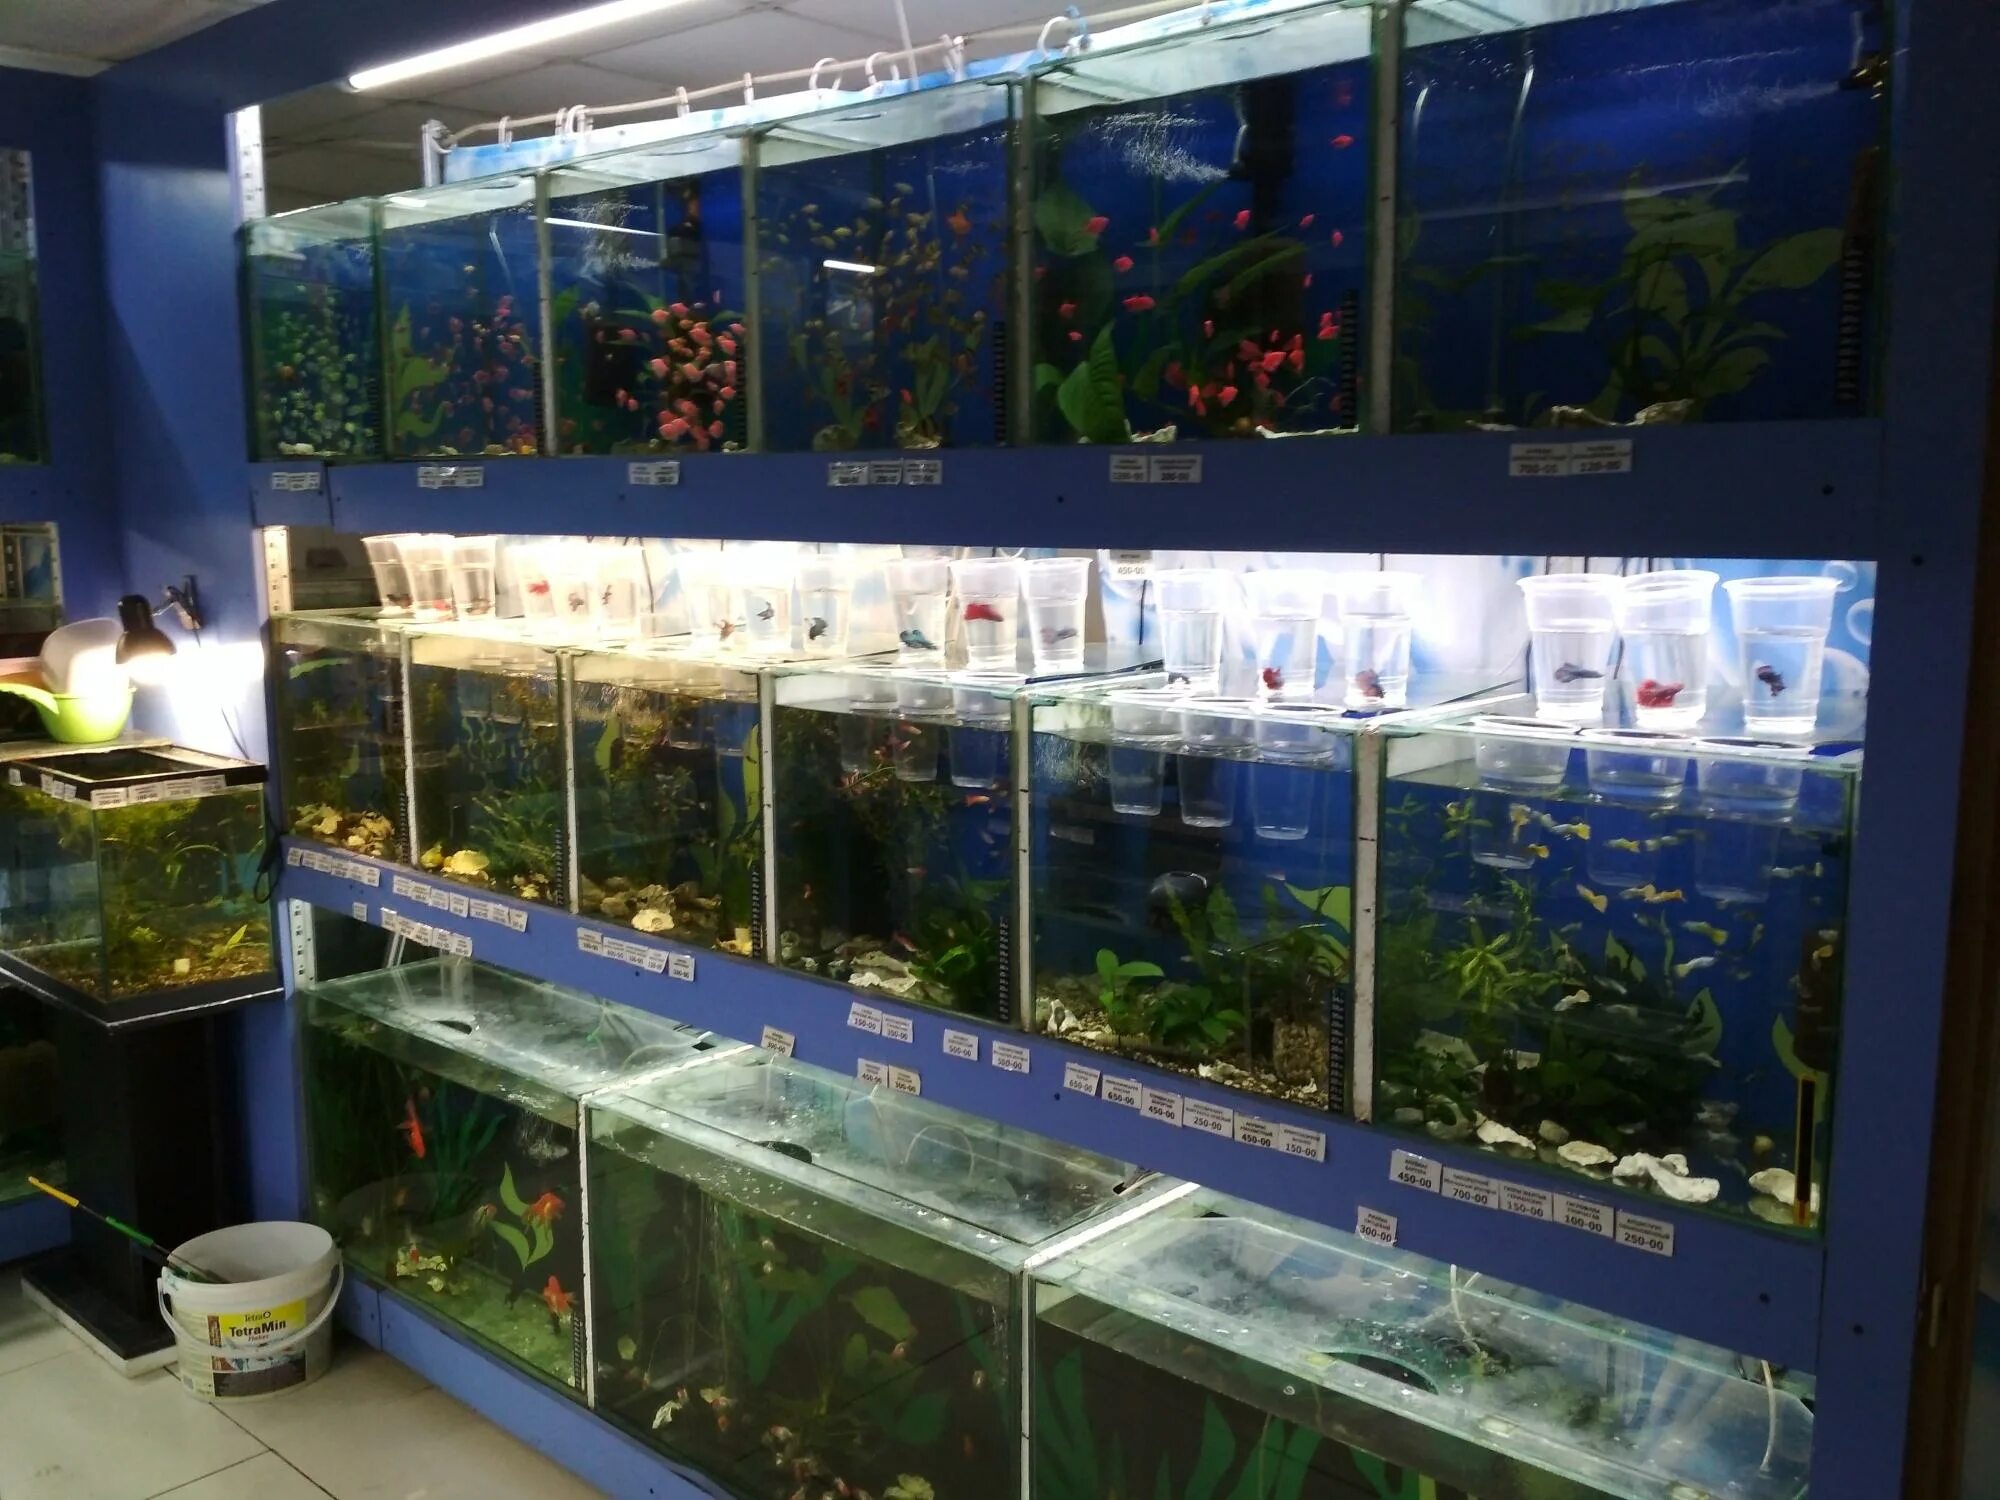 Зоомагазин аквариум. Аквариум с рыбками в зоомагазине. Аквариумные рыбки в зоомагазине. Зоомагазин с рыбками рядом.